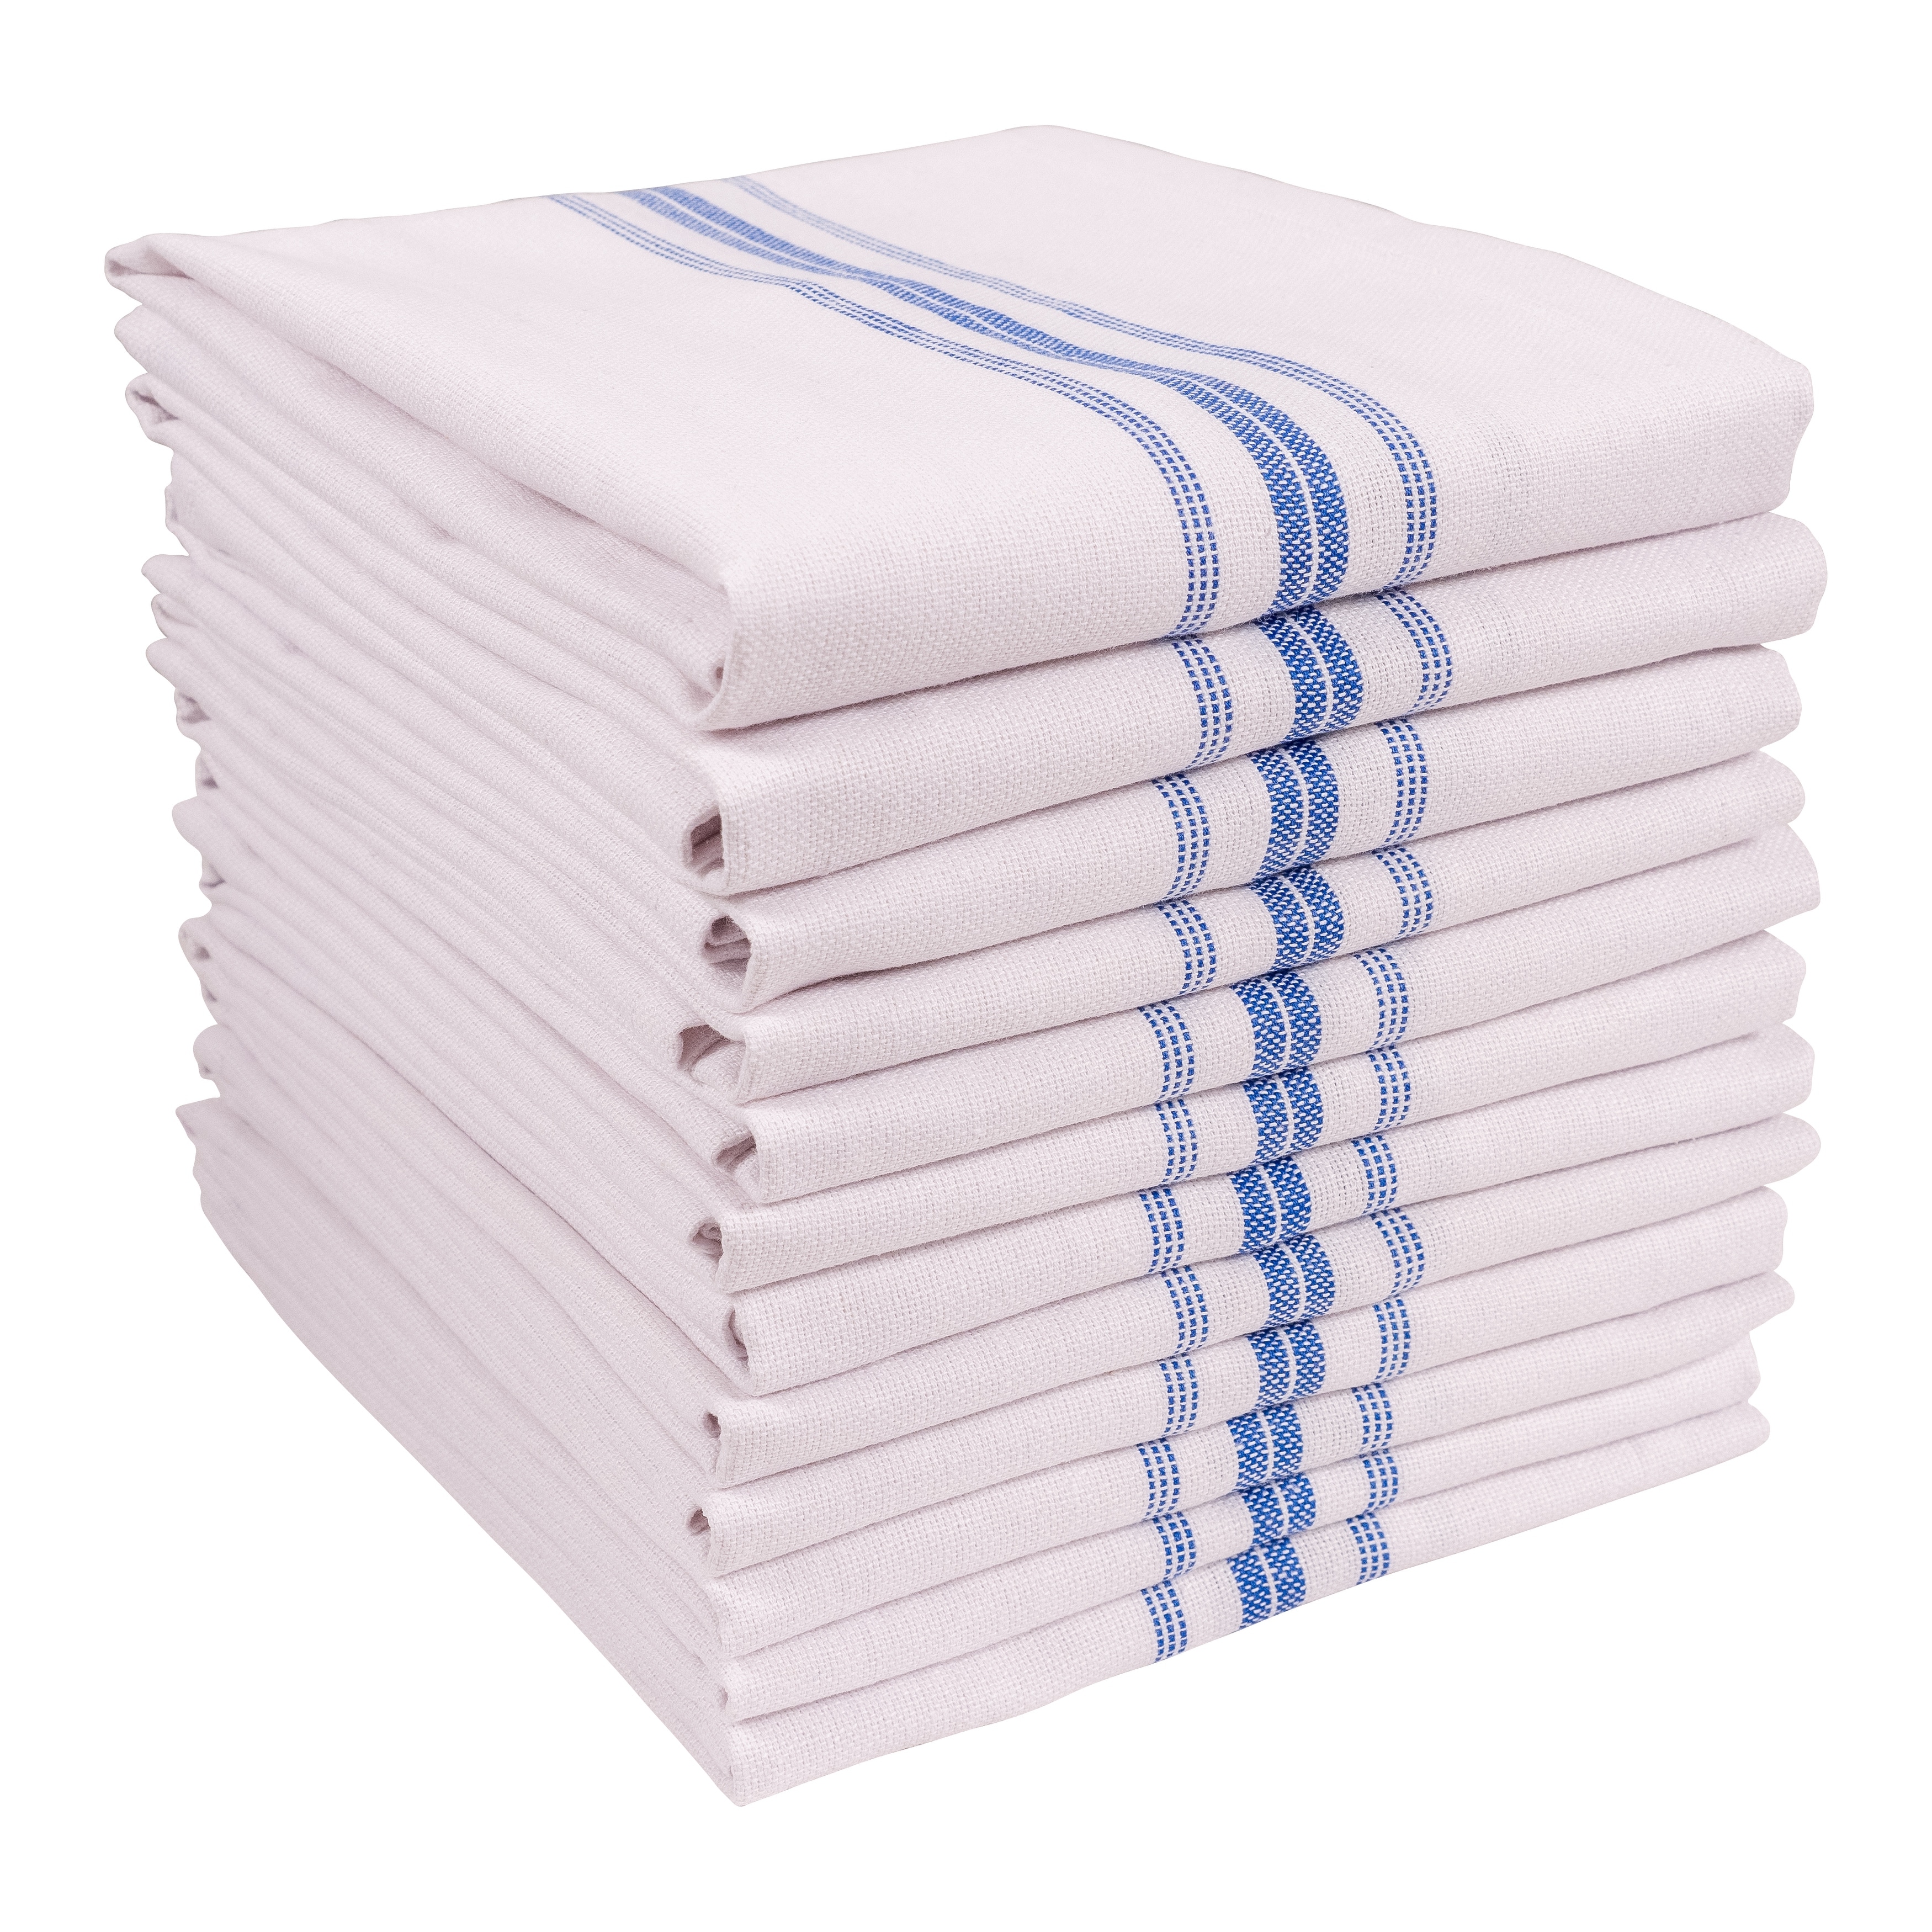 https://ak1.ostkcdn.com/images/products/is/images/direct/ed92a52540b95c900706181e06a2d5244e224e62/Classic-Cotton-Stripe-Towels%2C-Set-of-12.jpg